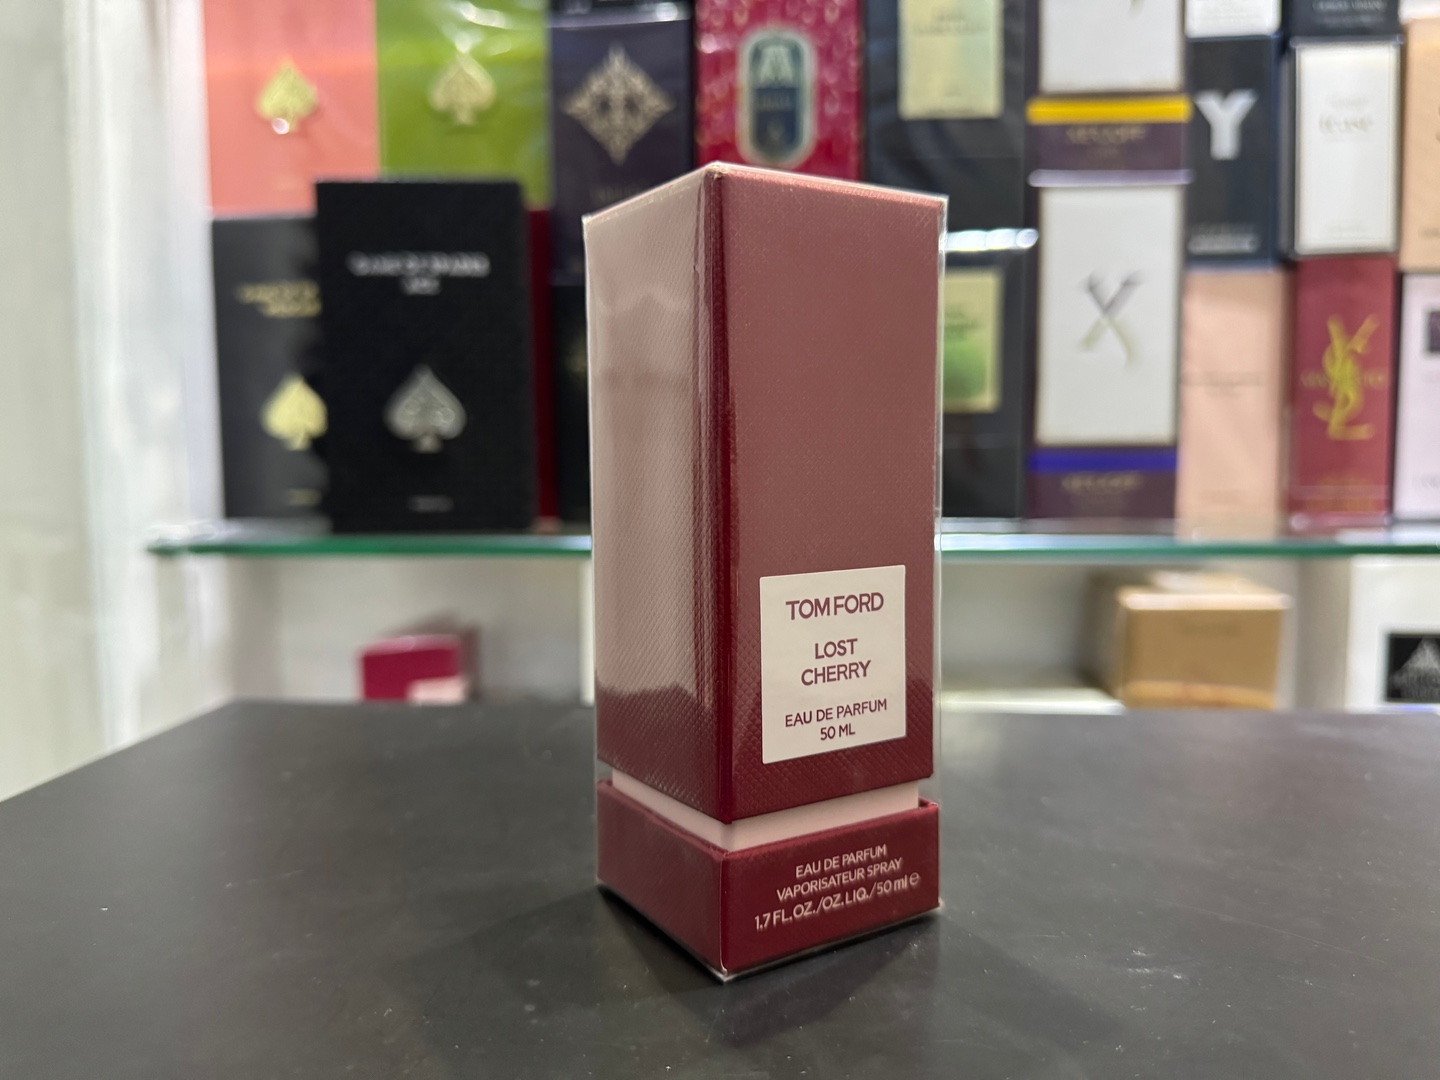 joyas, relojes y accesorios - Perfume Tom Ford Lost Cherry 50ML Edp Nuevo, Original RD$ 12,995 NEG